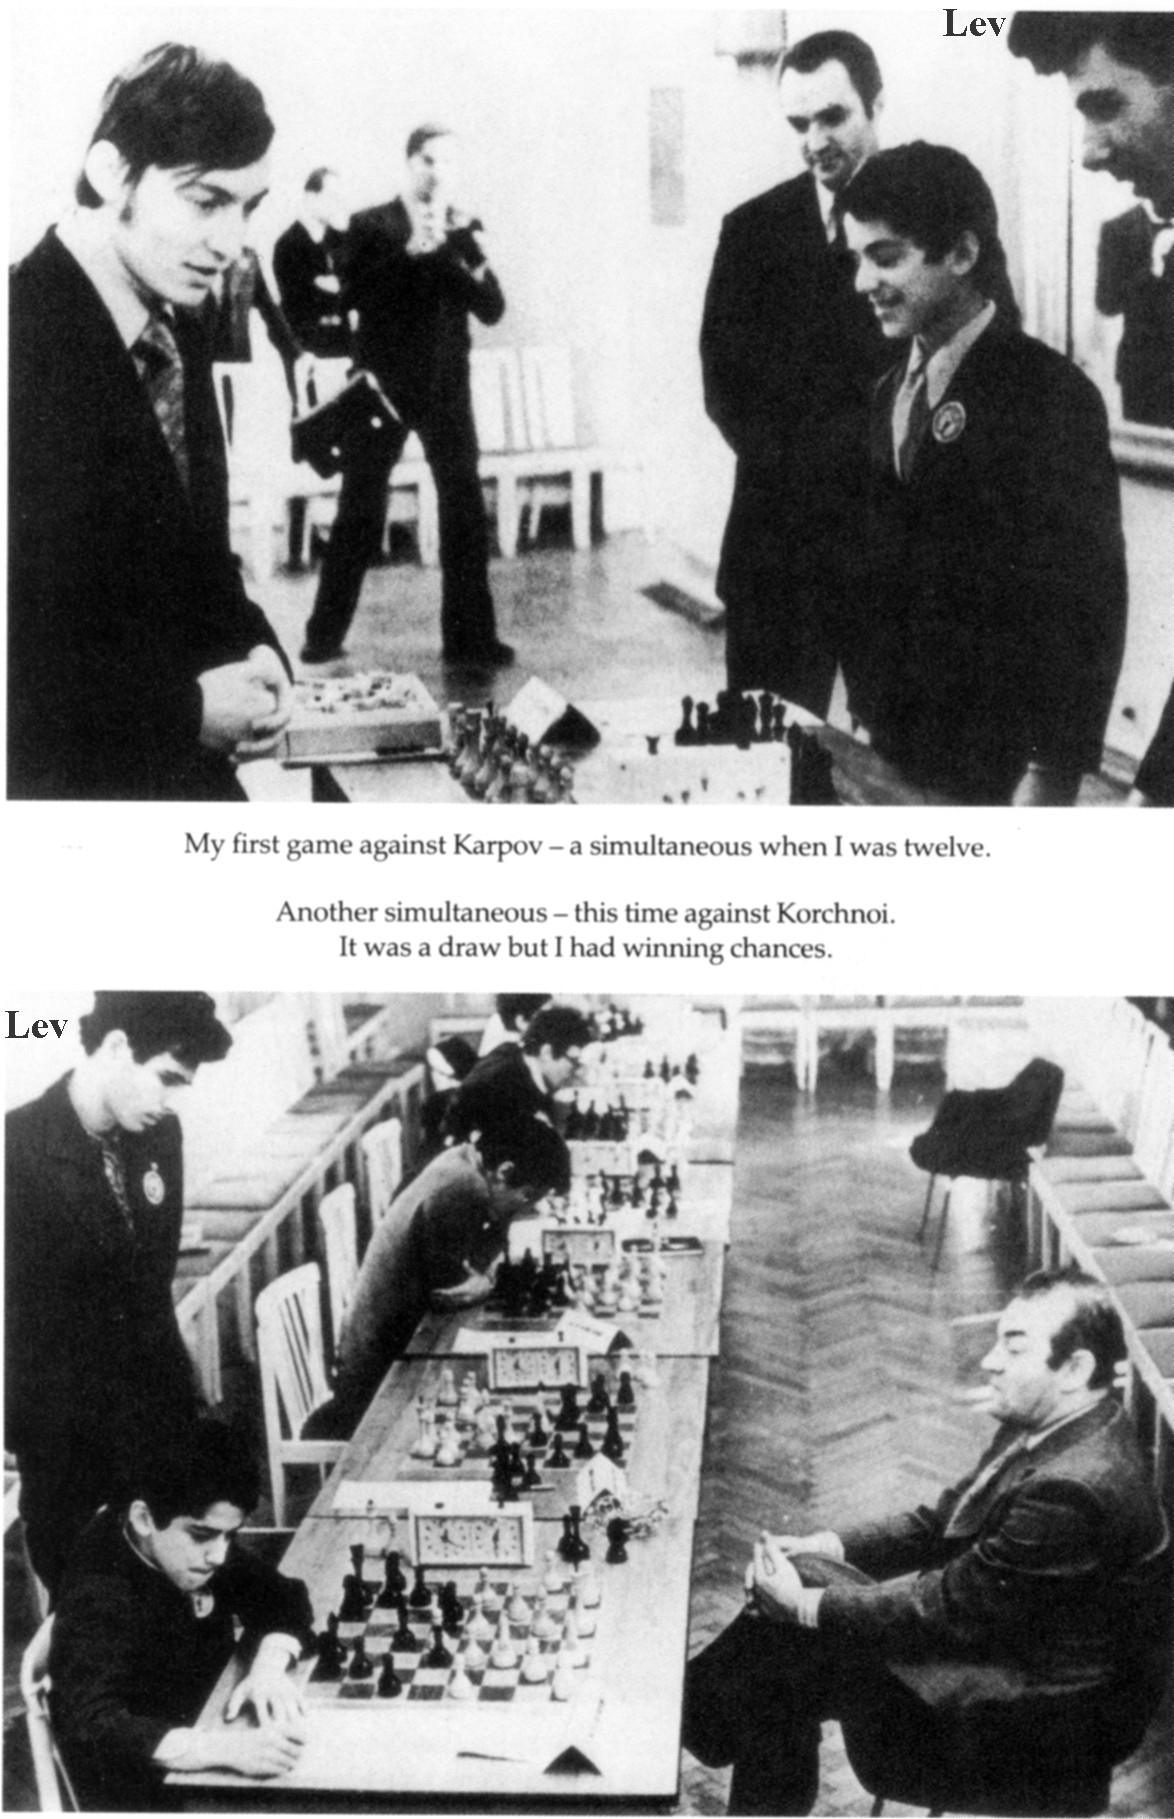 Garry Kasparov on Modern Chess - VOLUME III